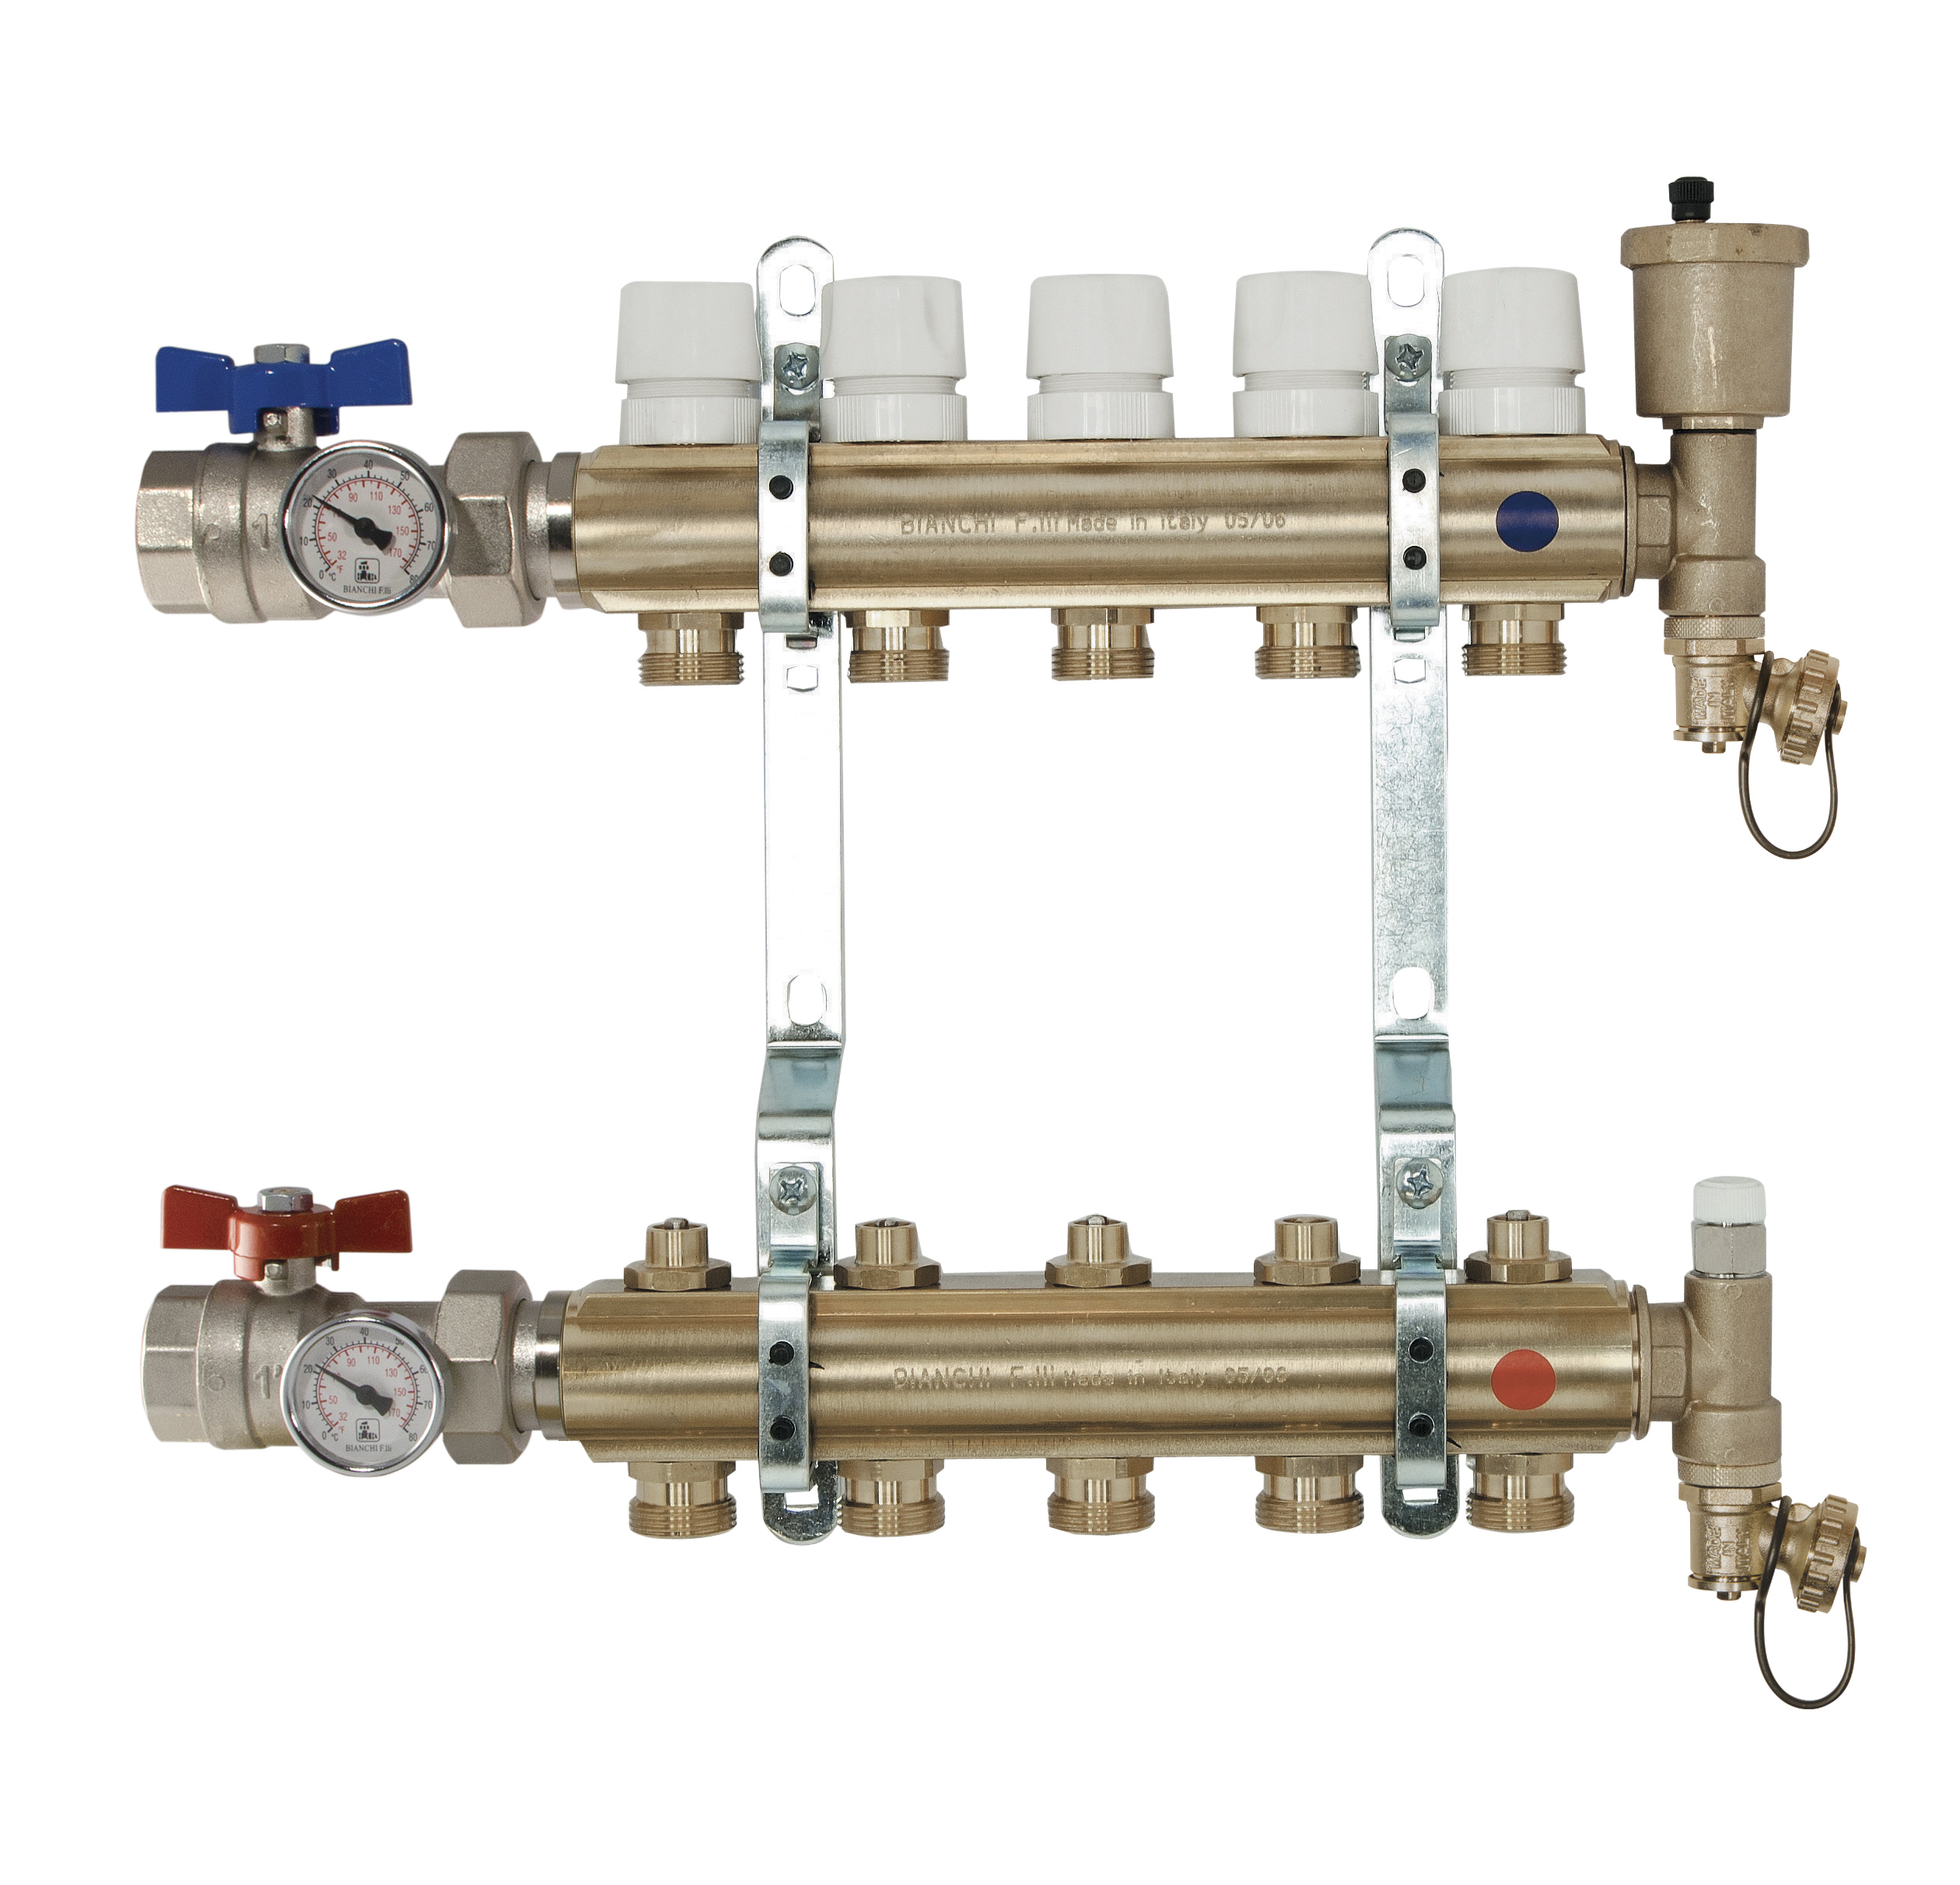 Brass manifolds therm. valves and lockshield, valves, disch. %>